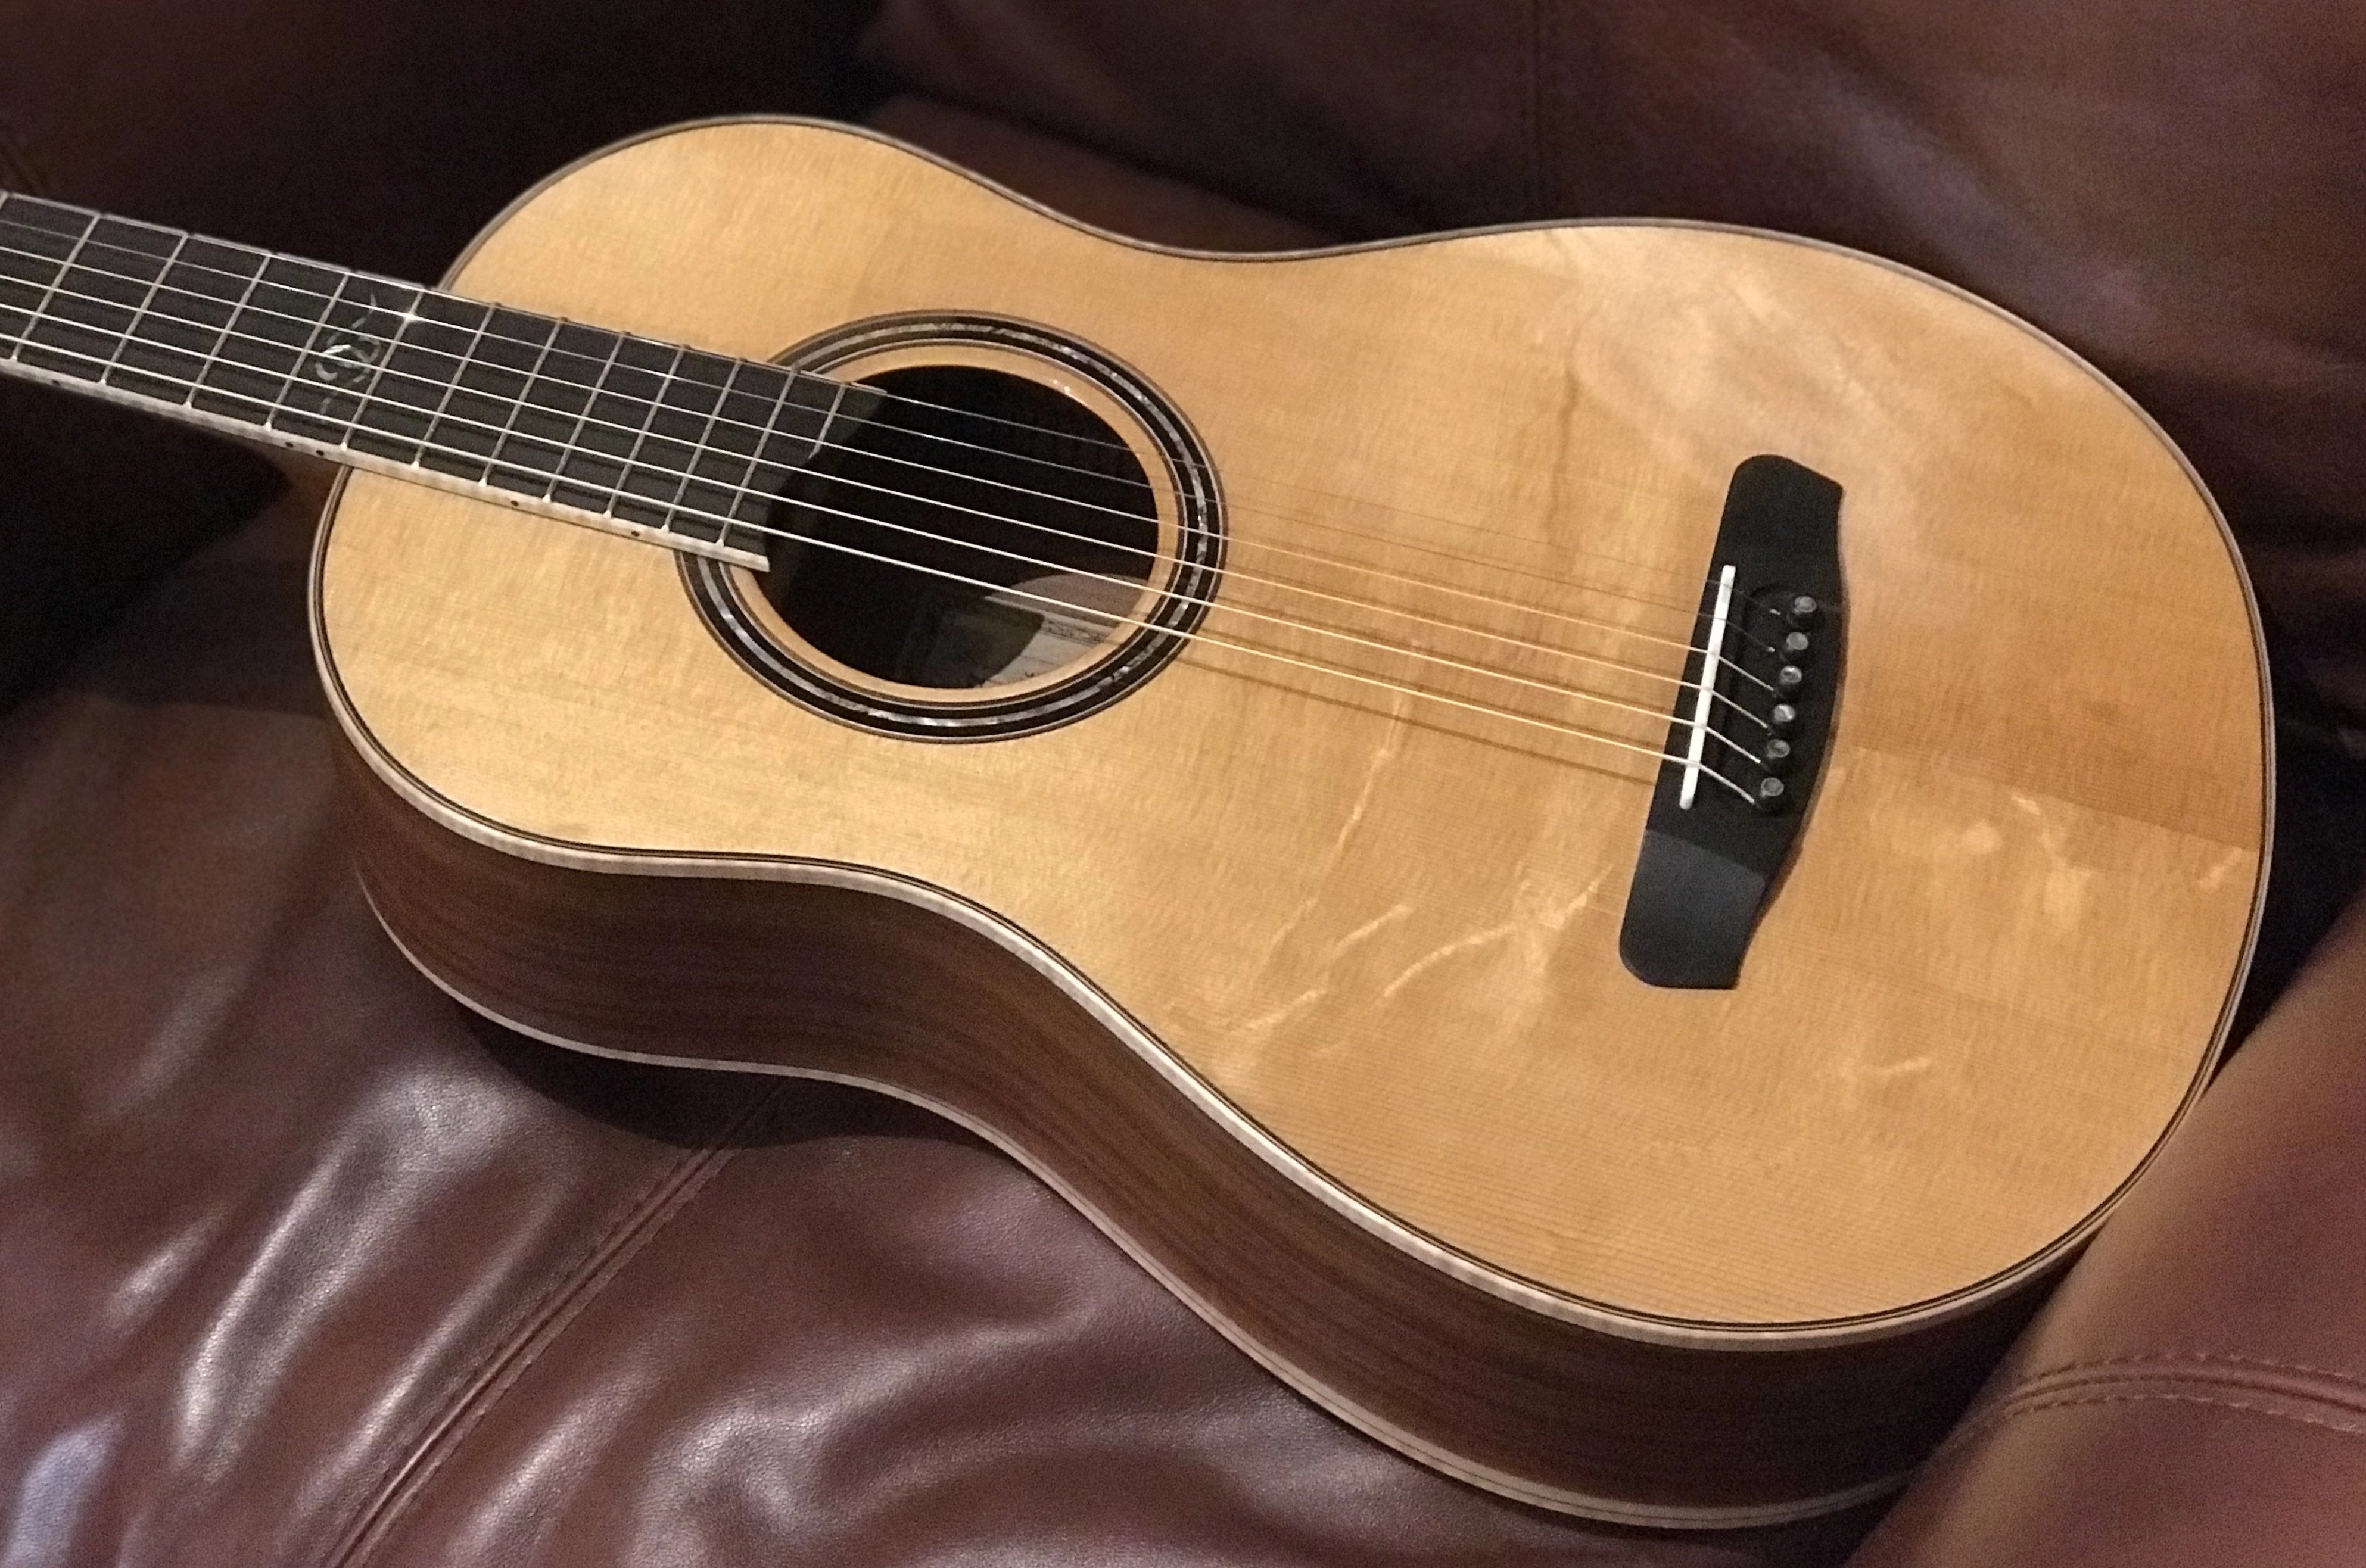 Dowina Granadillo DS BV, Acoustic Guitar for sale at Richards Guitars.